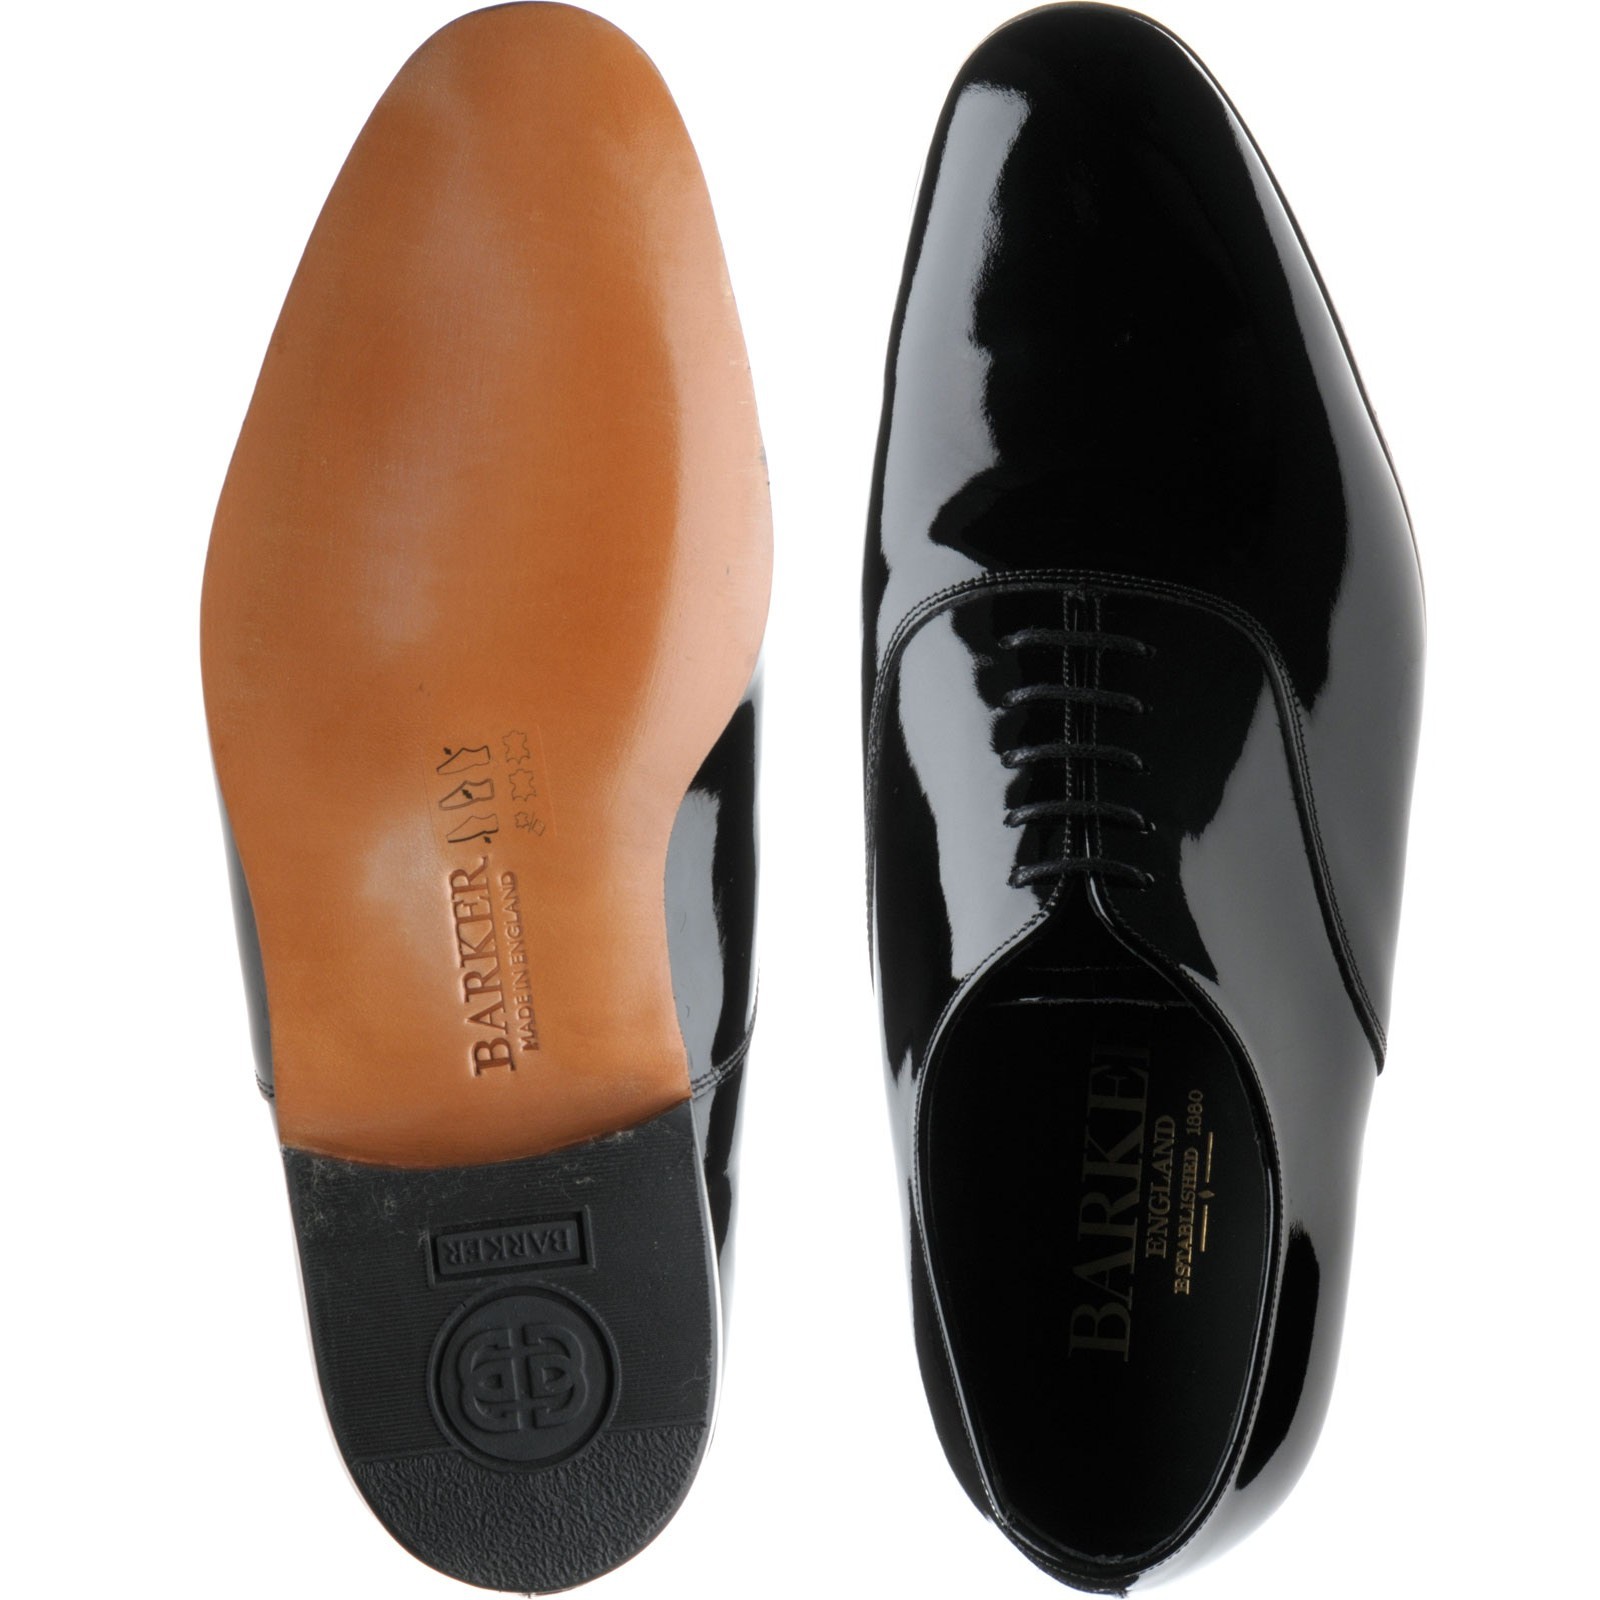 Barker shoes | Barker Professional | Madeley in Black Patent at Herring ...